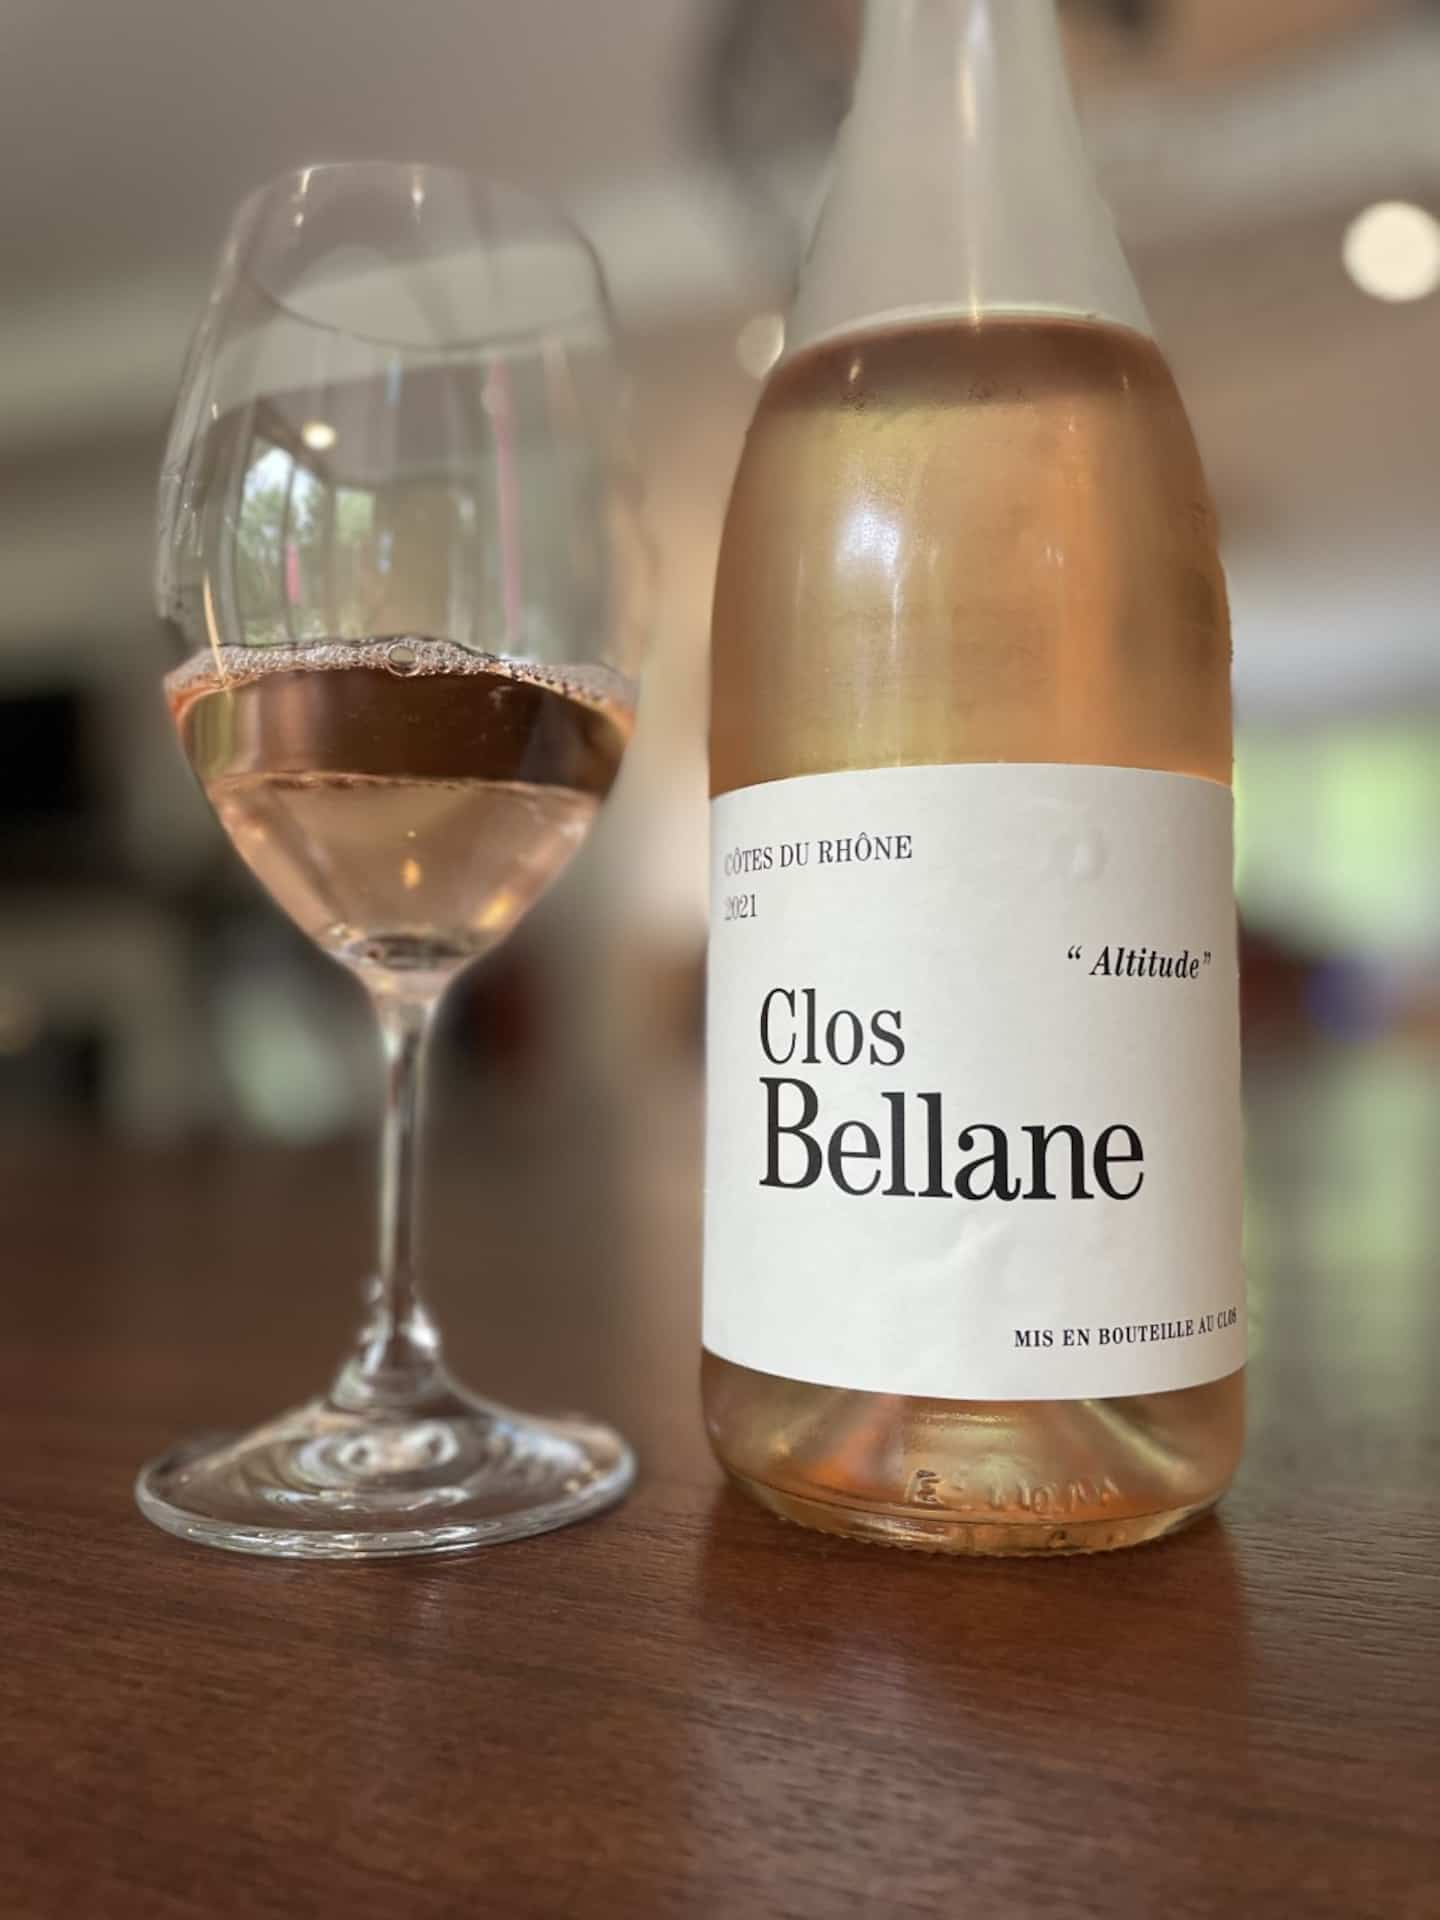 The return of Bellane rosé!